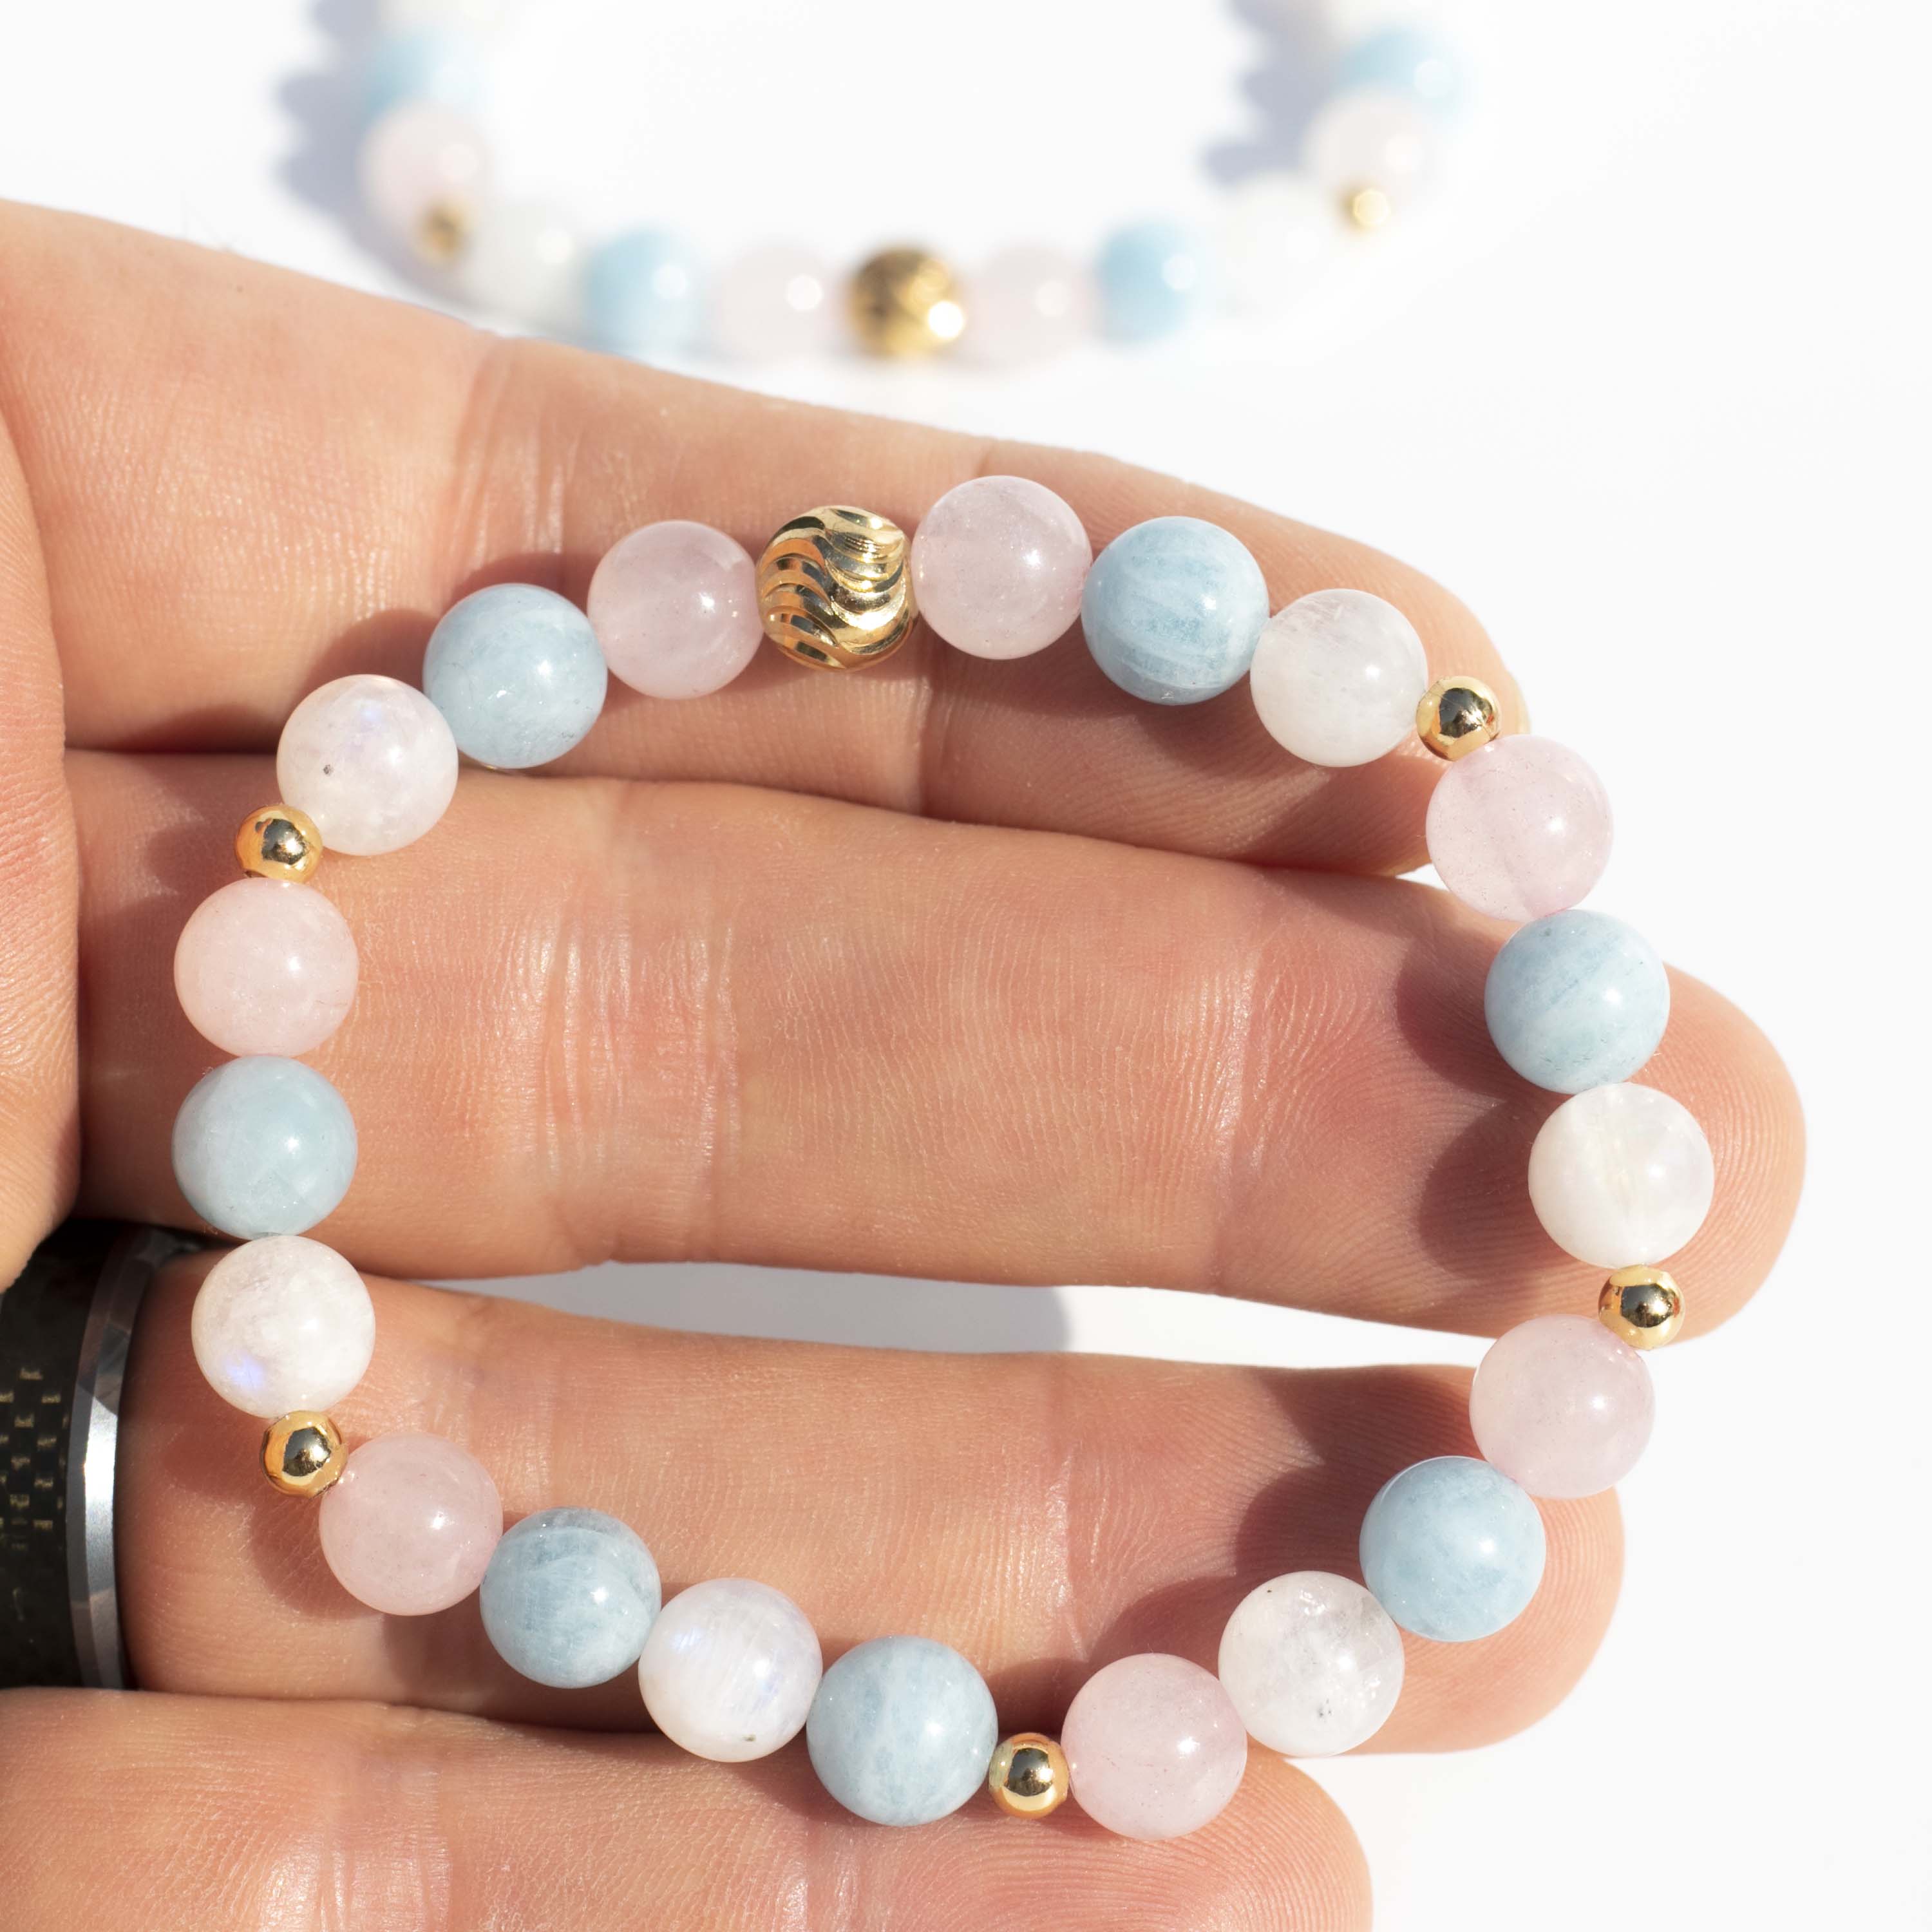 Moonstone (月亮石) - Aquamarine (海蓝宝石) - Rose Quartz (粉晶) | Stretchy Cord Bracelet | Gold Plated Spacer Beads | Choose Preferred Size